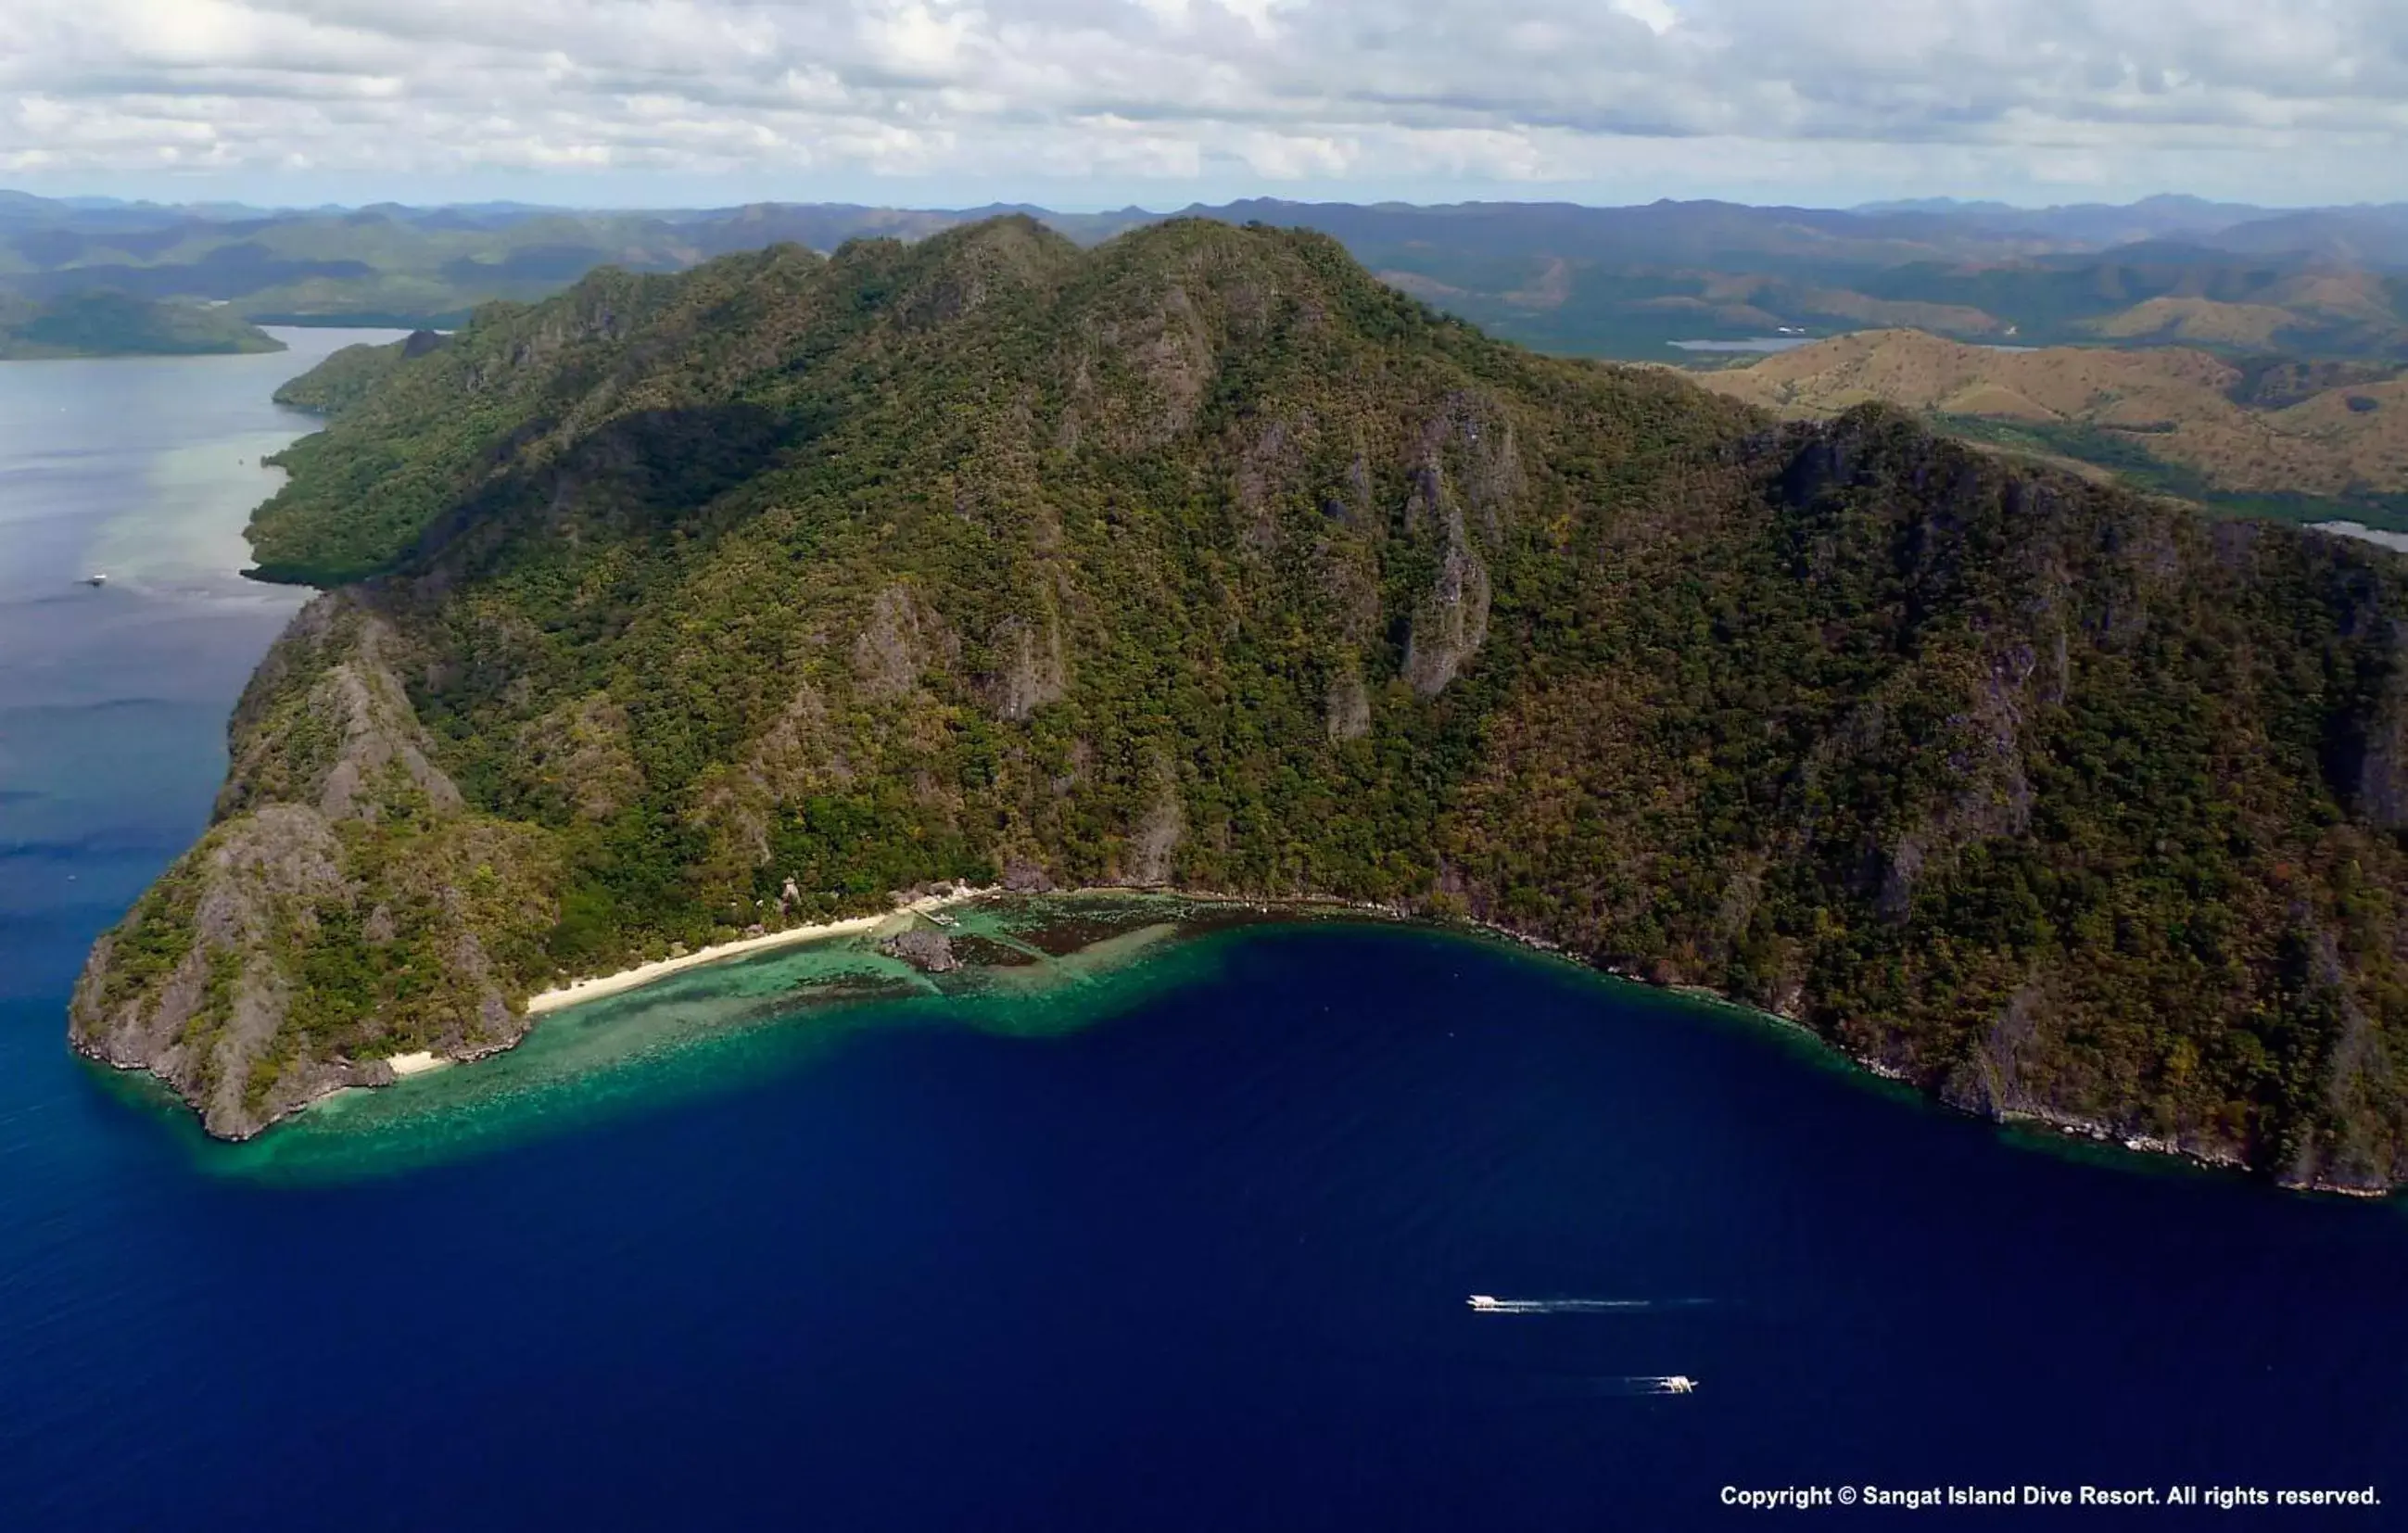 Natural landscape, Bird's-eye View in Sangat Island Dive Resort